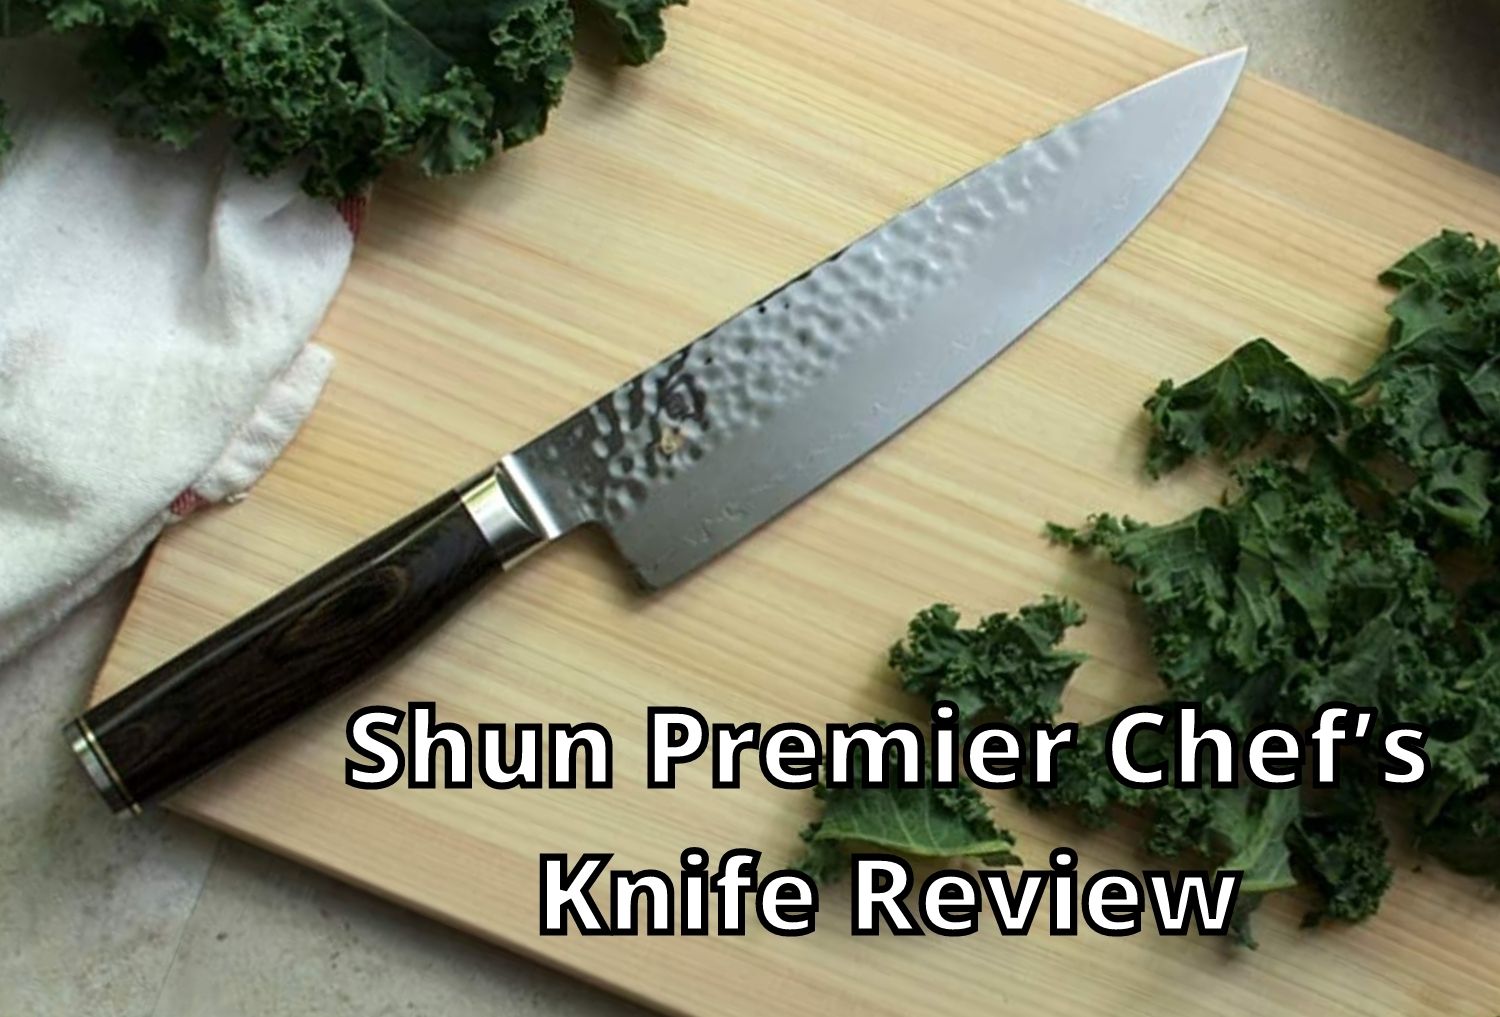 Shun Premier Chef’s Knife Review